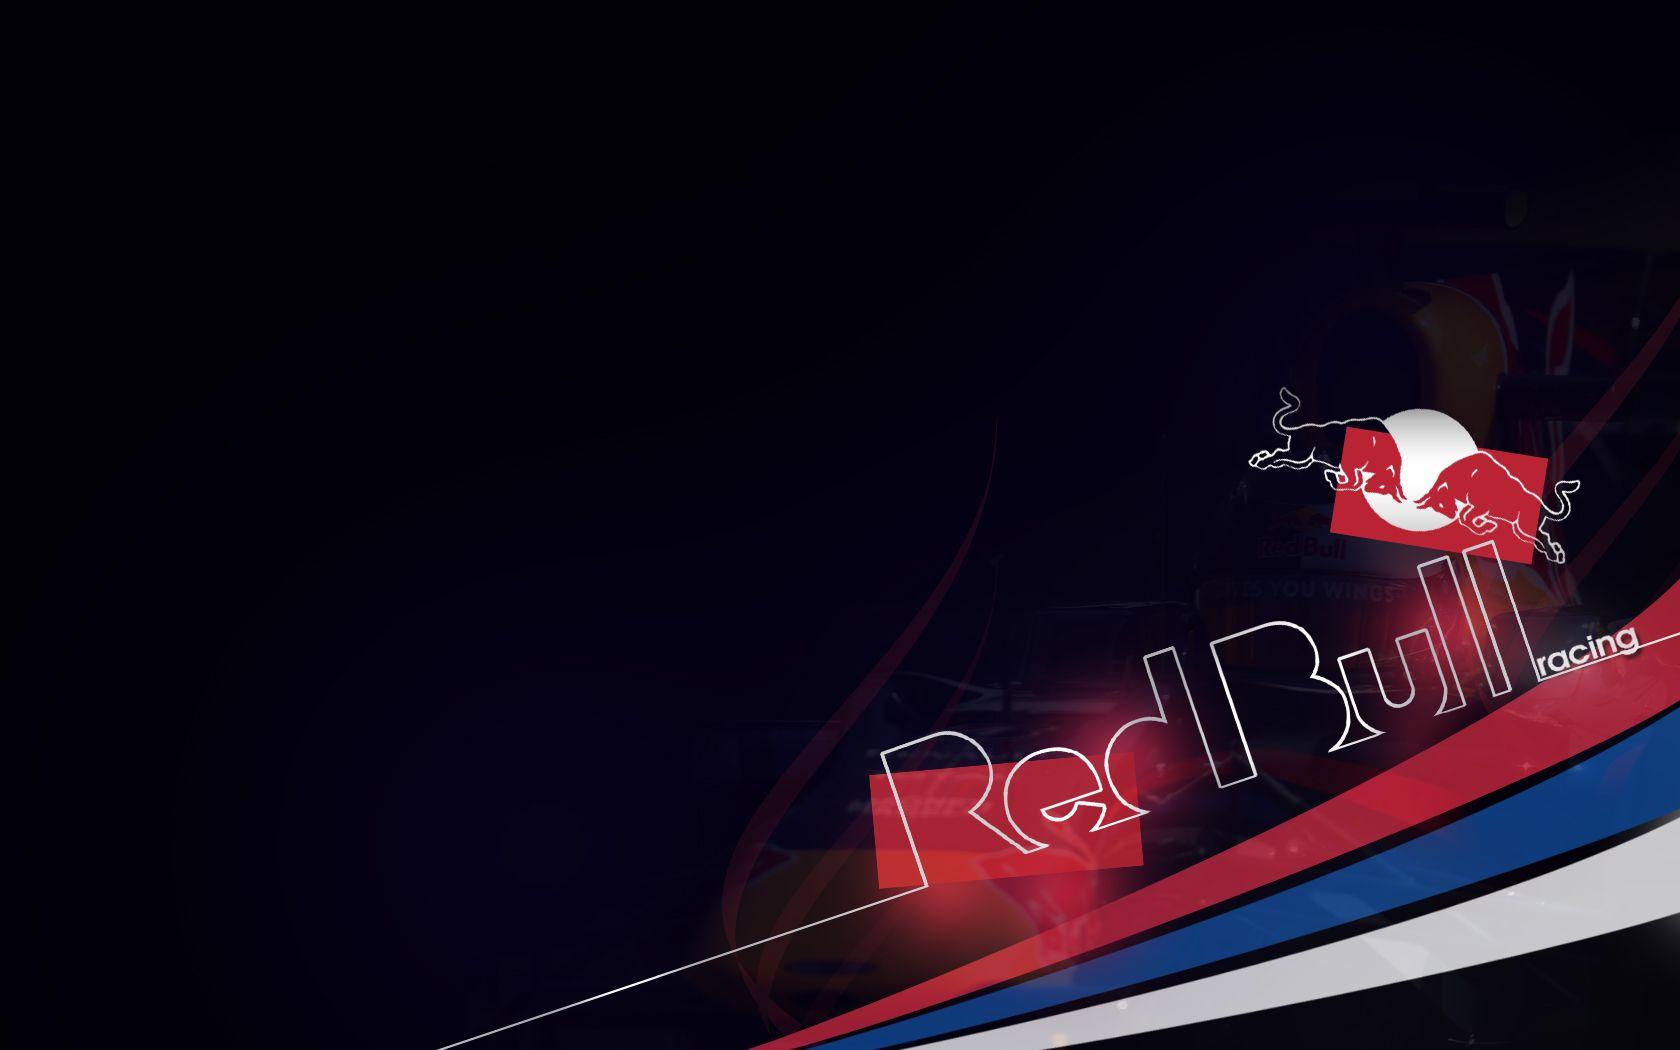 Red Bull HD Wallpaper, Gladys Hardman for PC & Mac, Tablet, Laptop